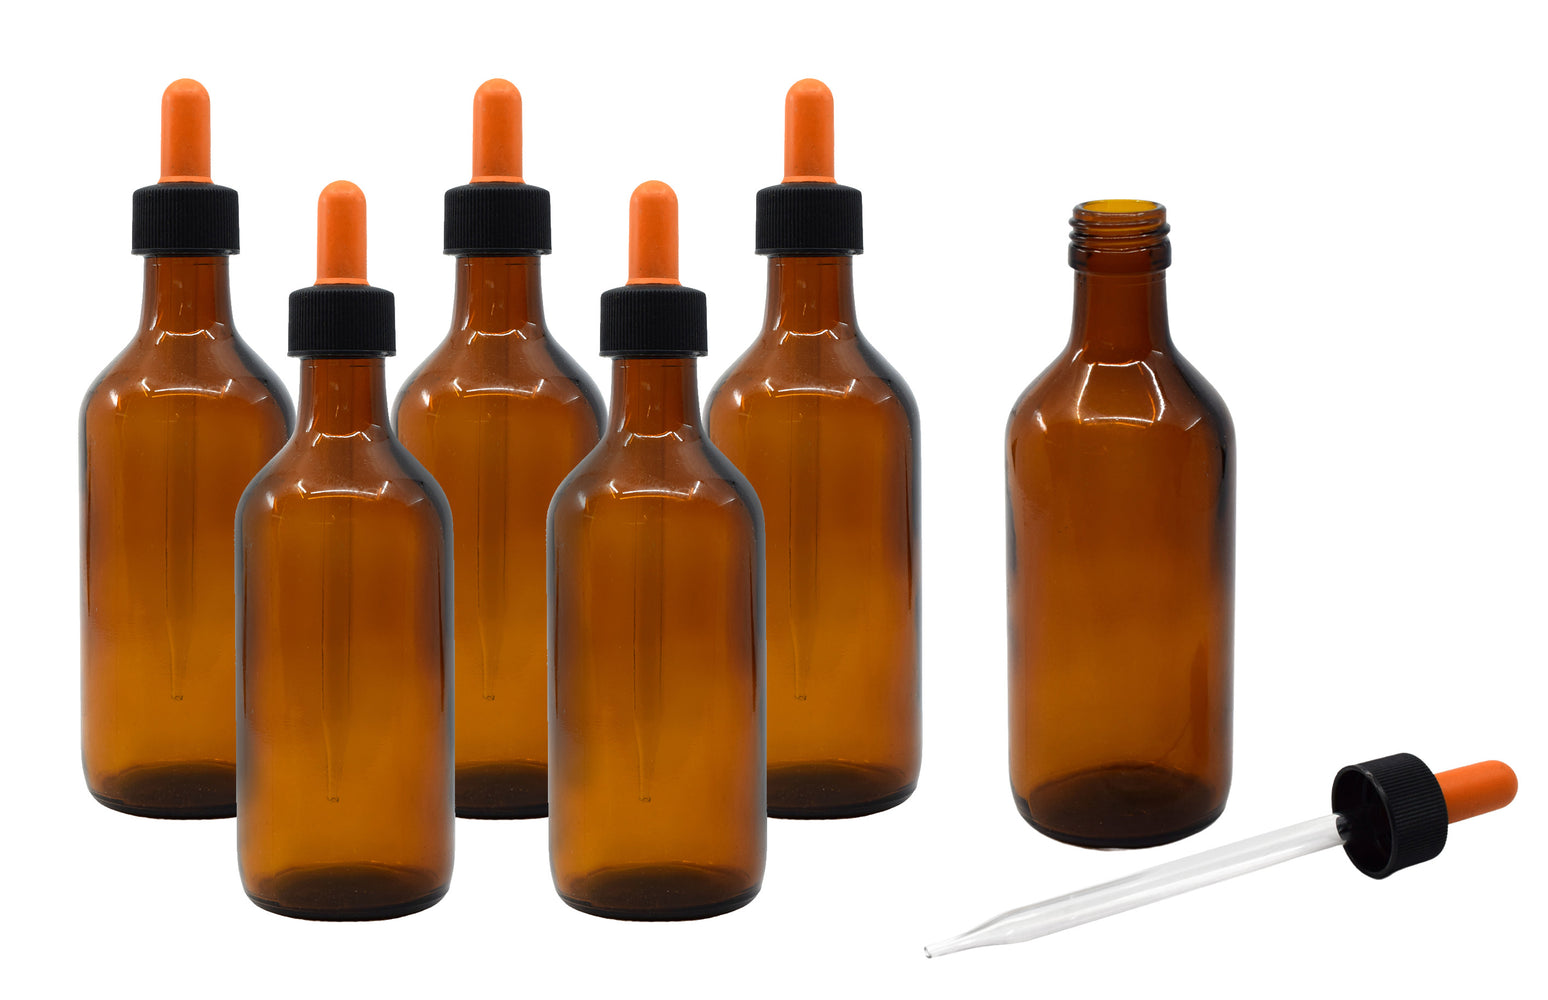 Amber Boston Round Glass Bottles - 6 oz